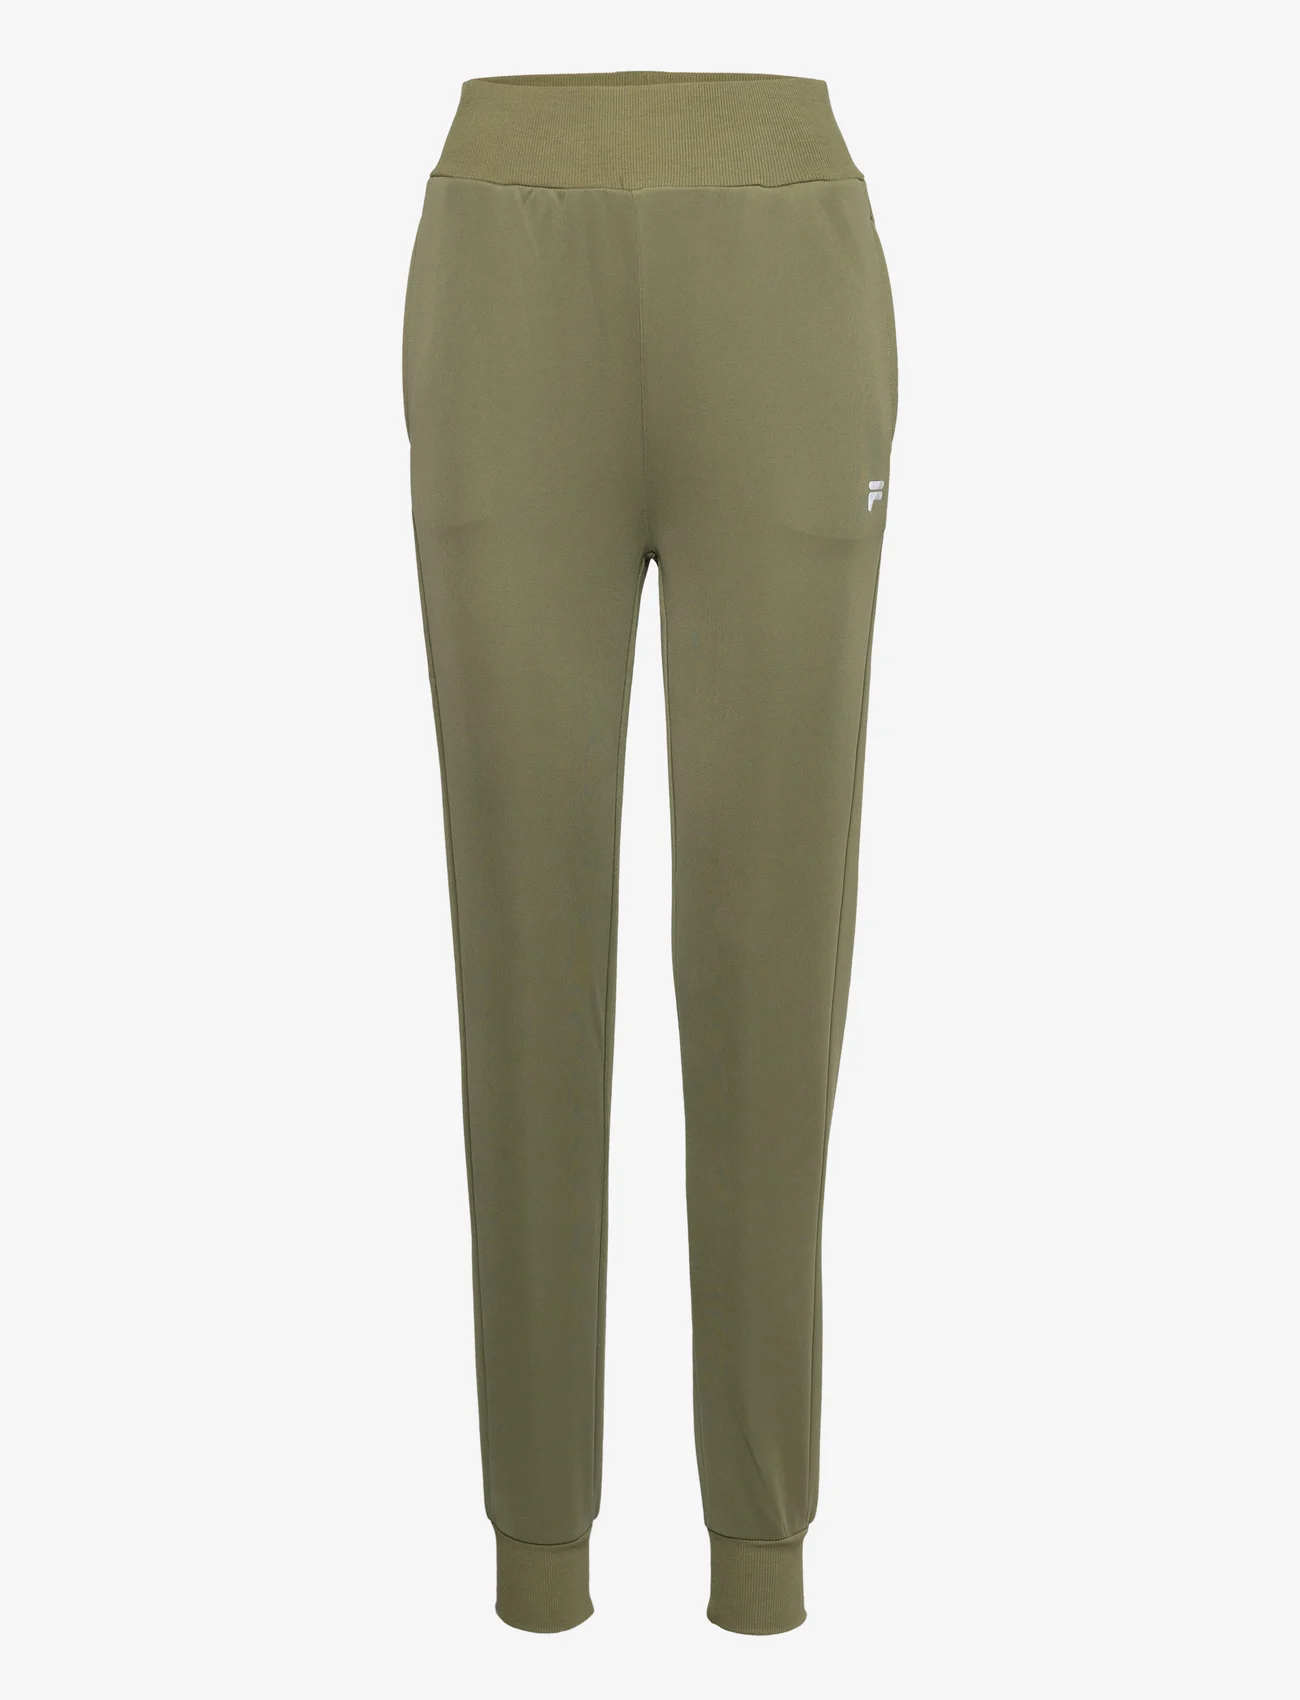 FILA - CAGLI high waist pants - sweatpants - loden green - 0